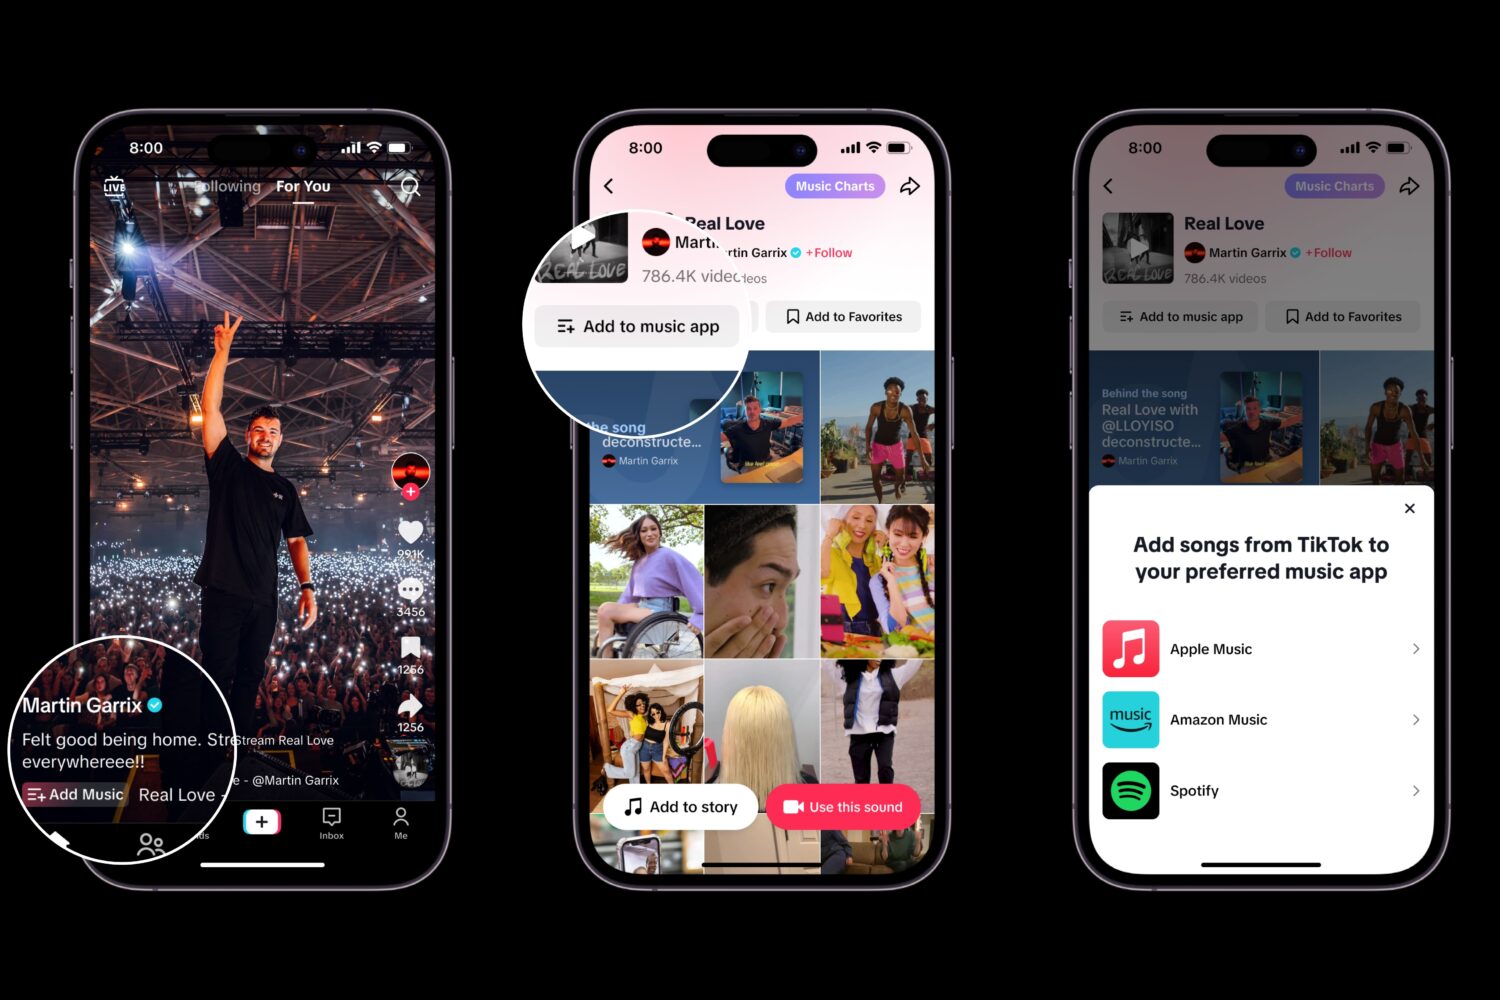 TikTok's iPhone app showcasing the Add to Music App button